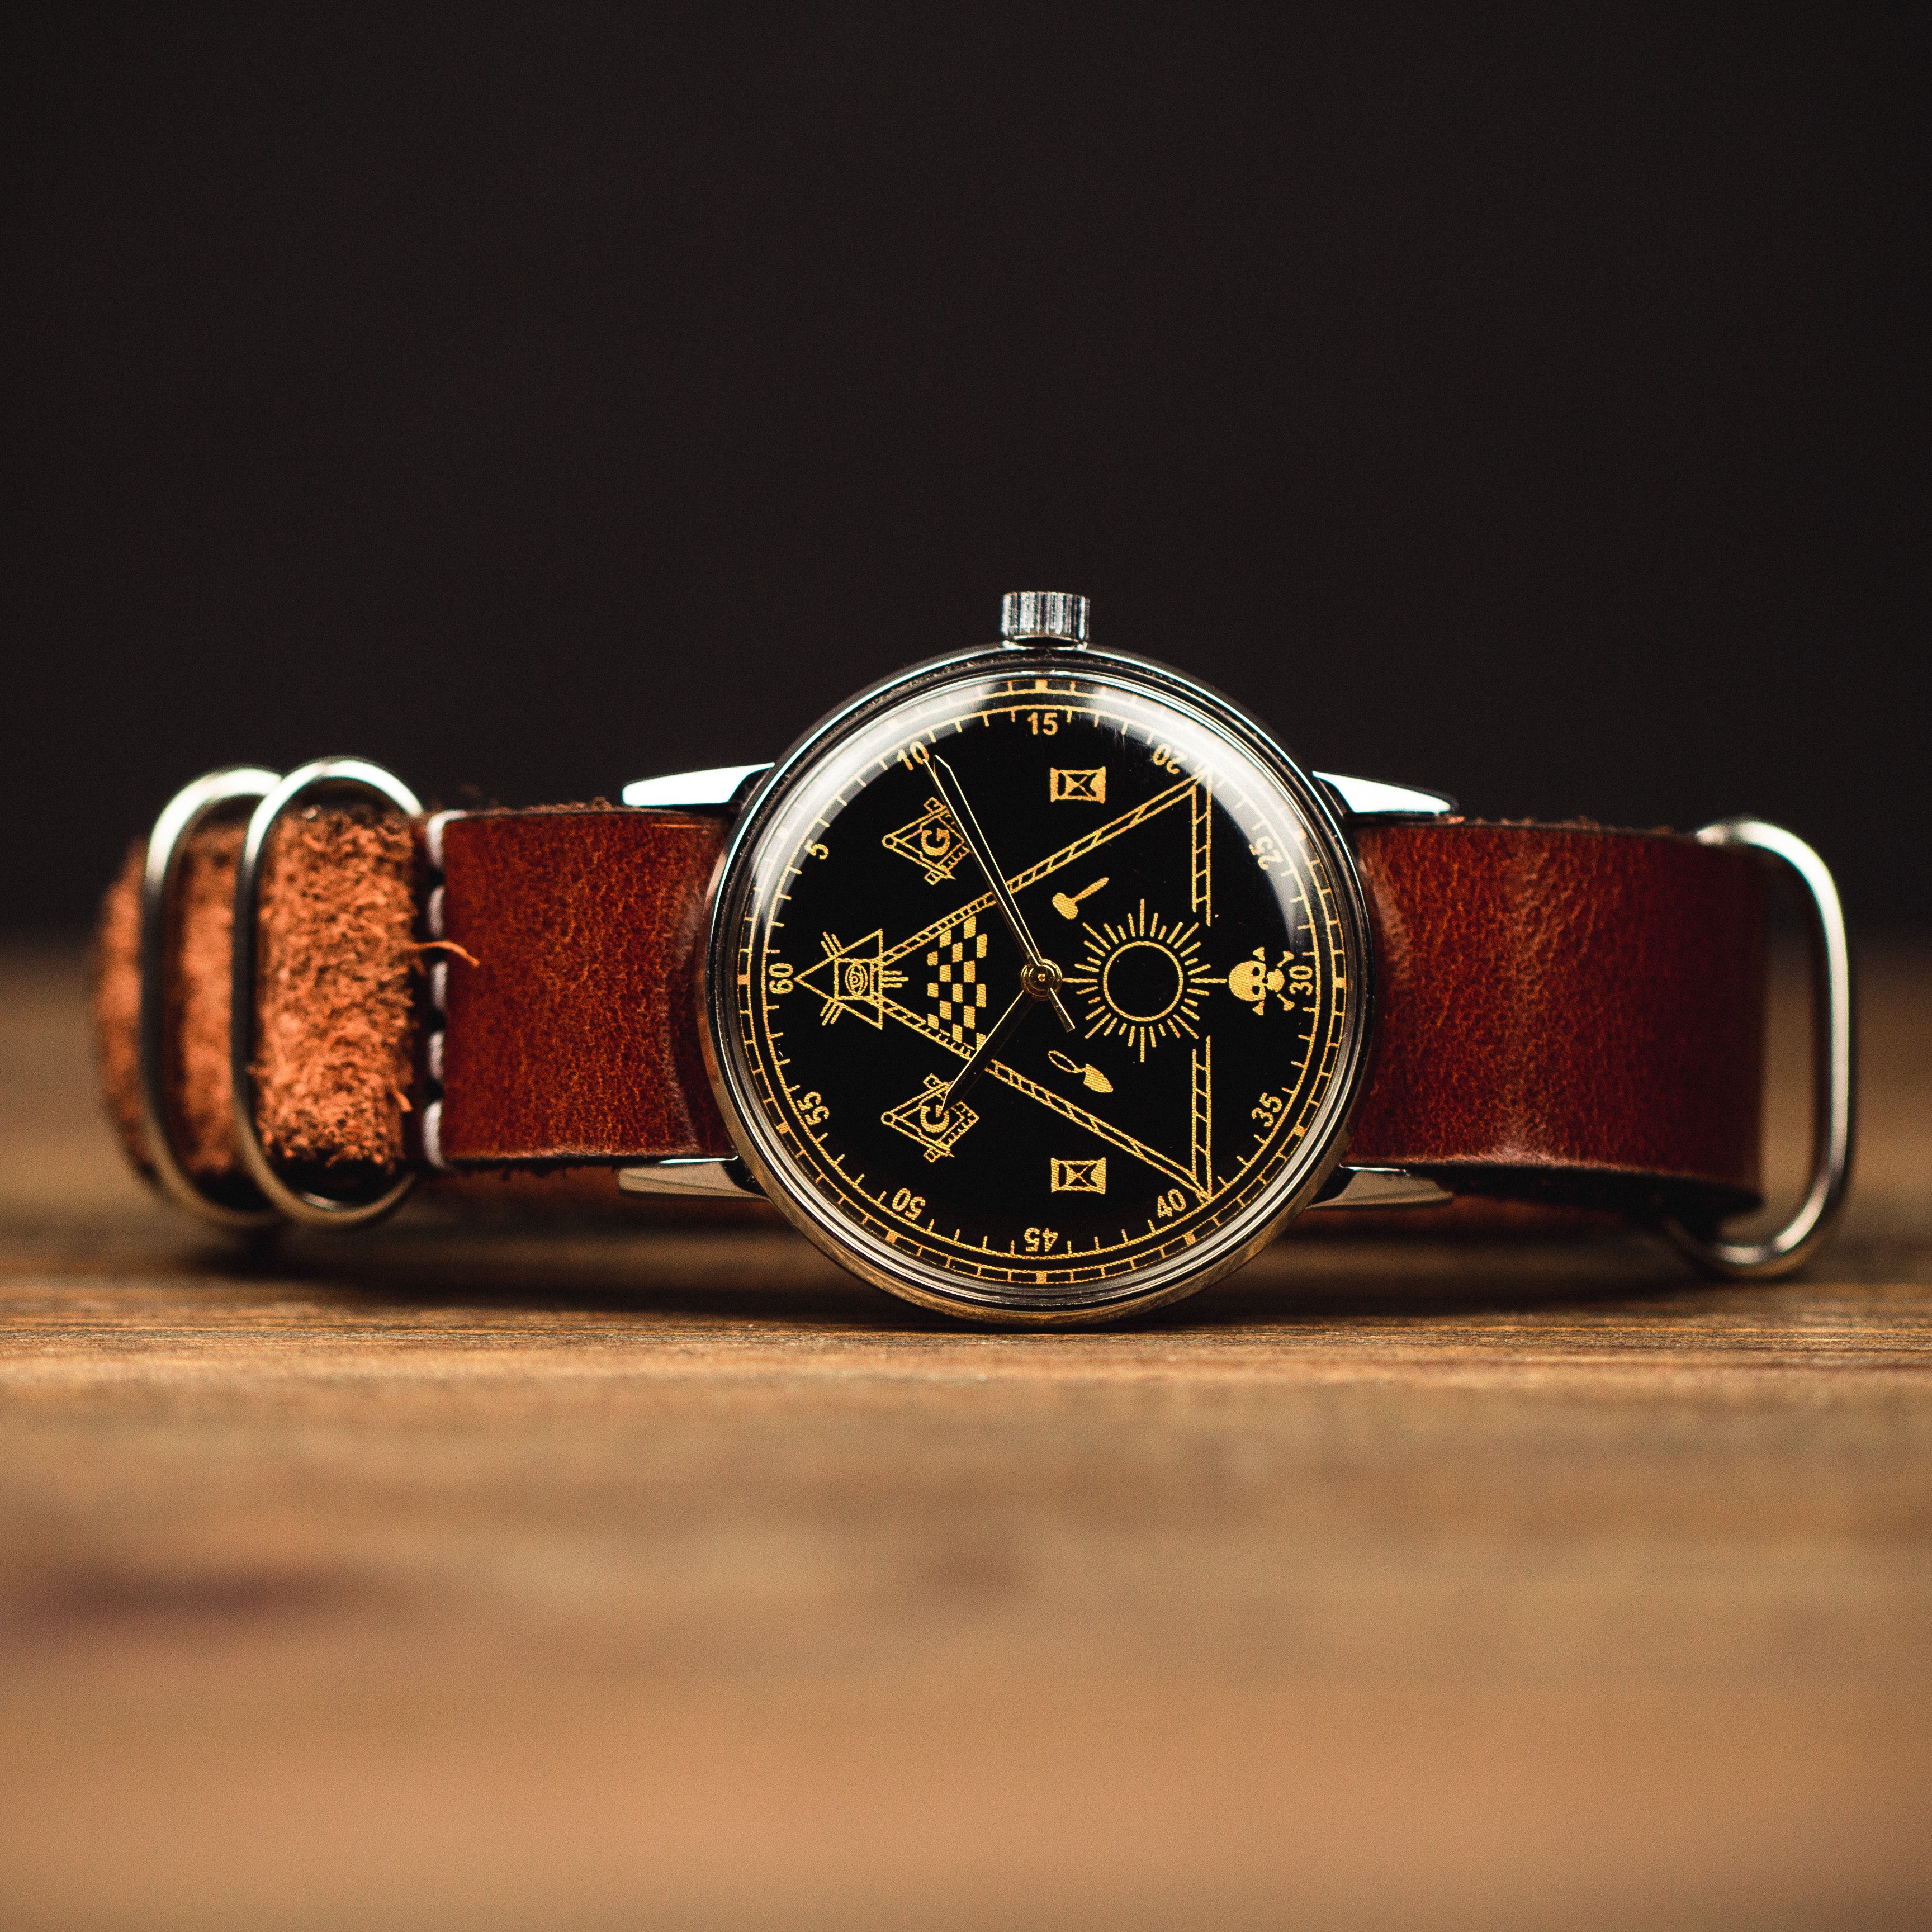 Very rare soviet vintage men's wrist watch Poljot - Masonic with leather nato strap